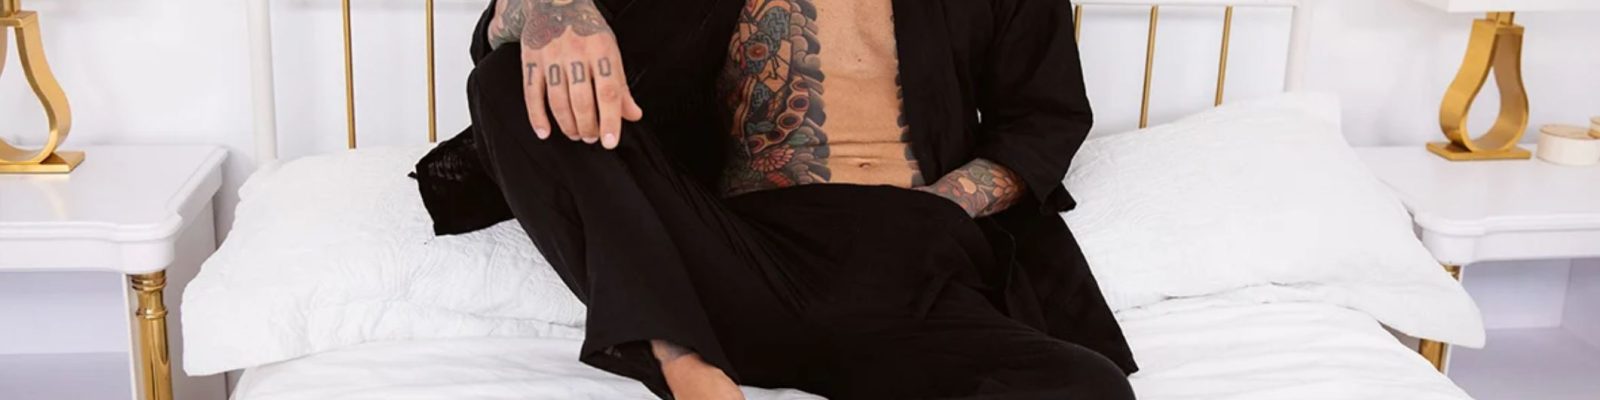 Juan Lucho in black kimono on bed